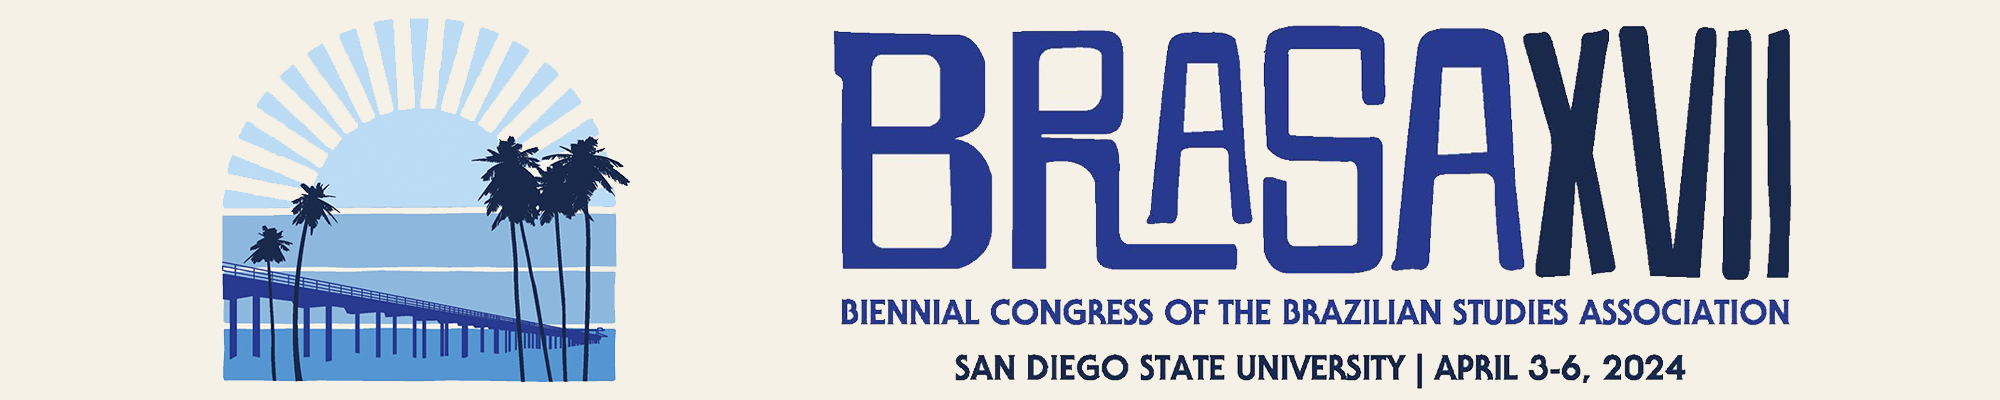 BRASA XVII Biennial Congress of Brazilian Studies Association, San Diego State University, April 3-6, 2024